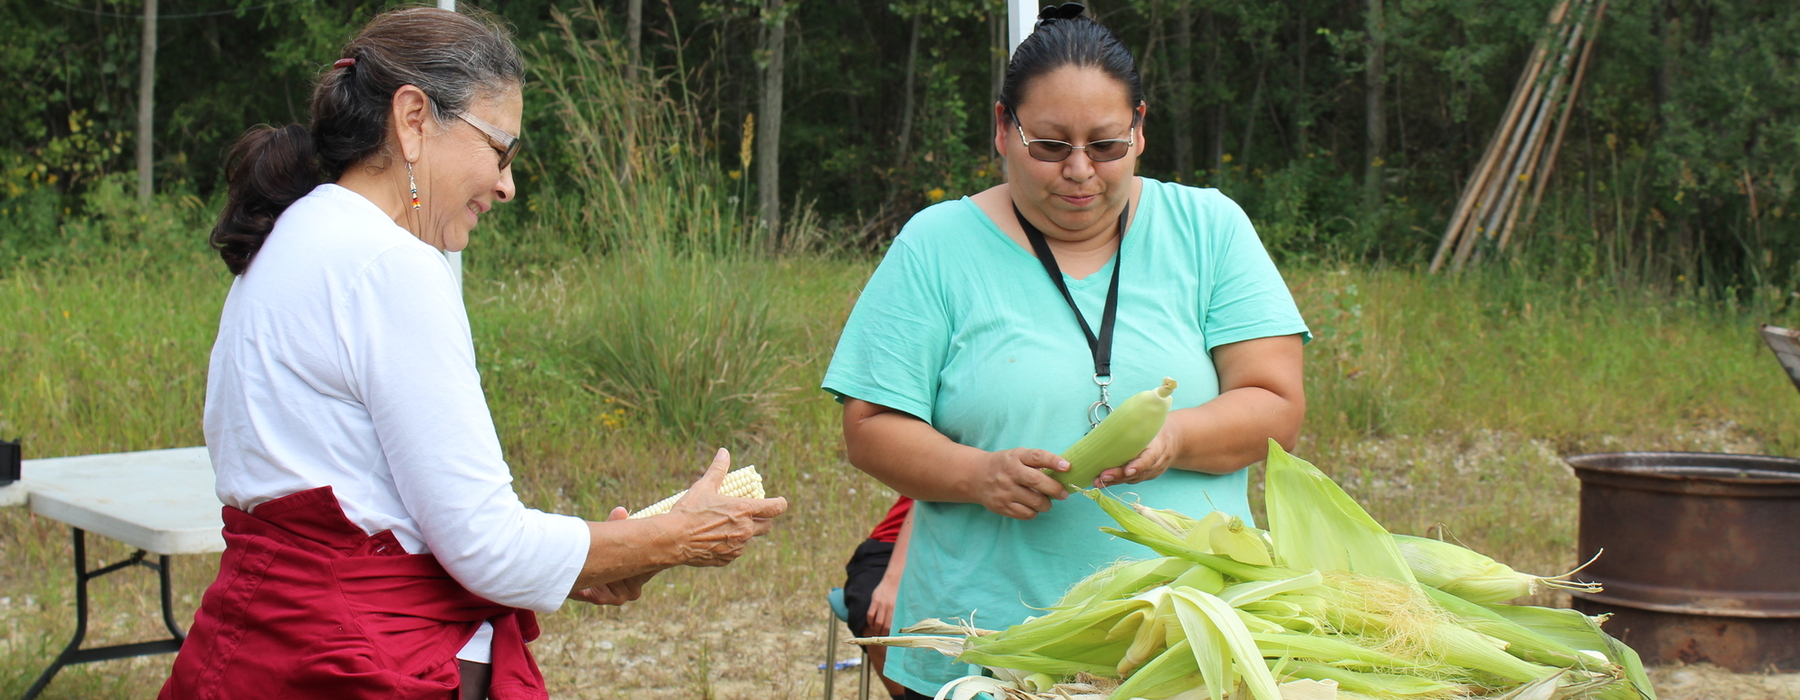 Two women husking corn